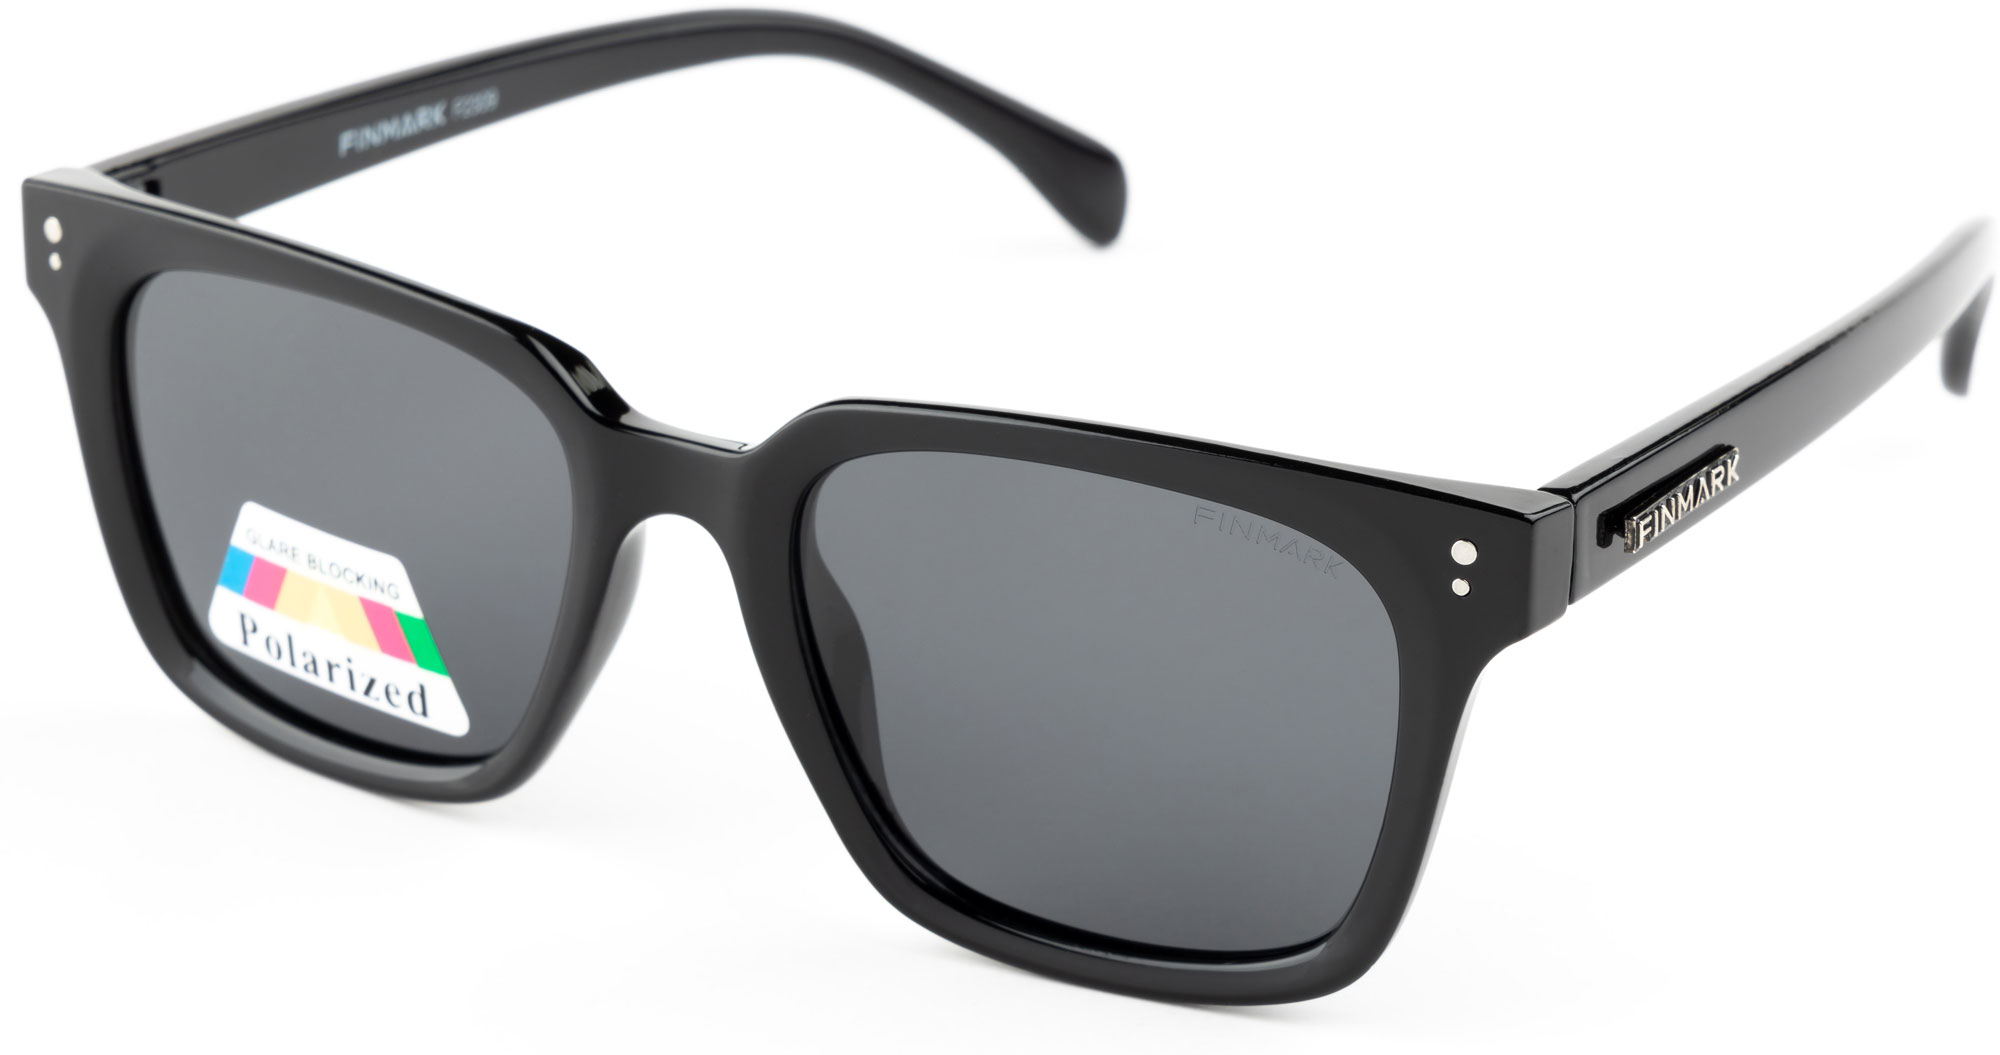 Sunglasses with polarized lenses